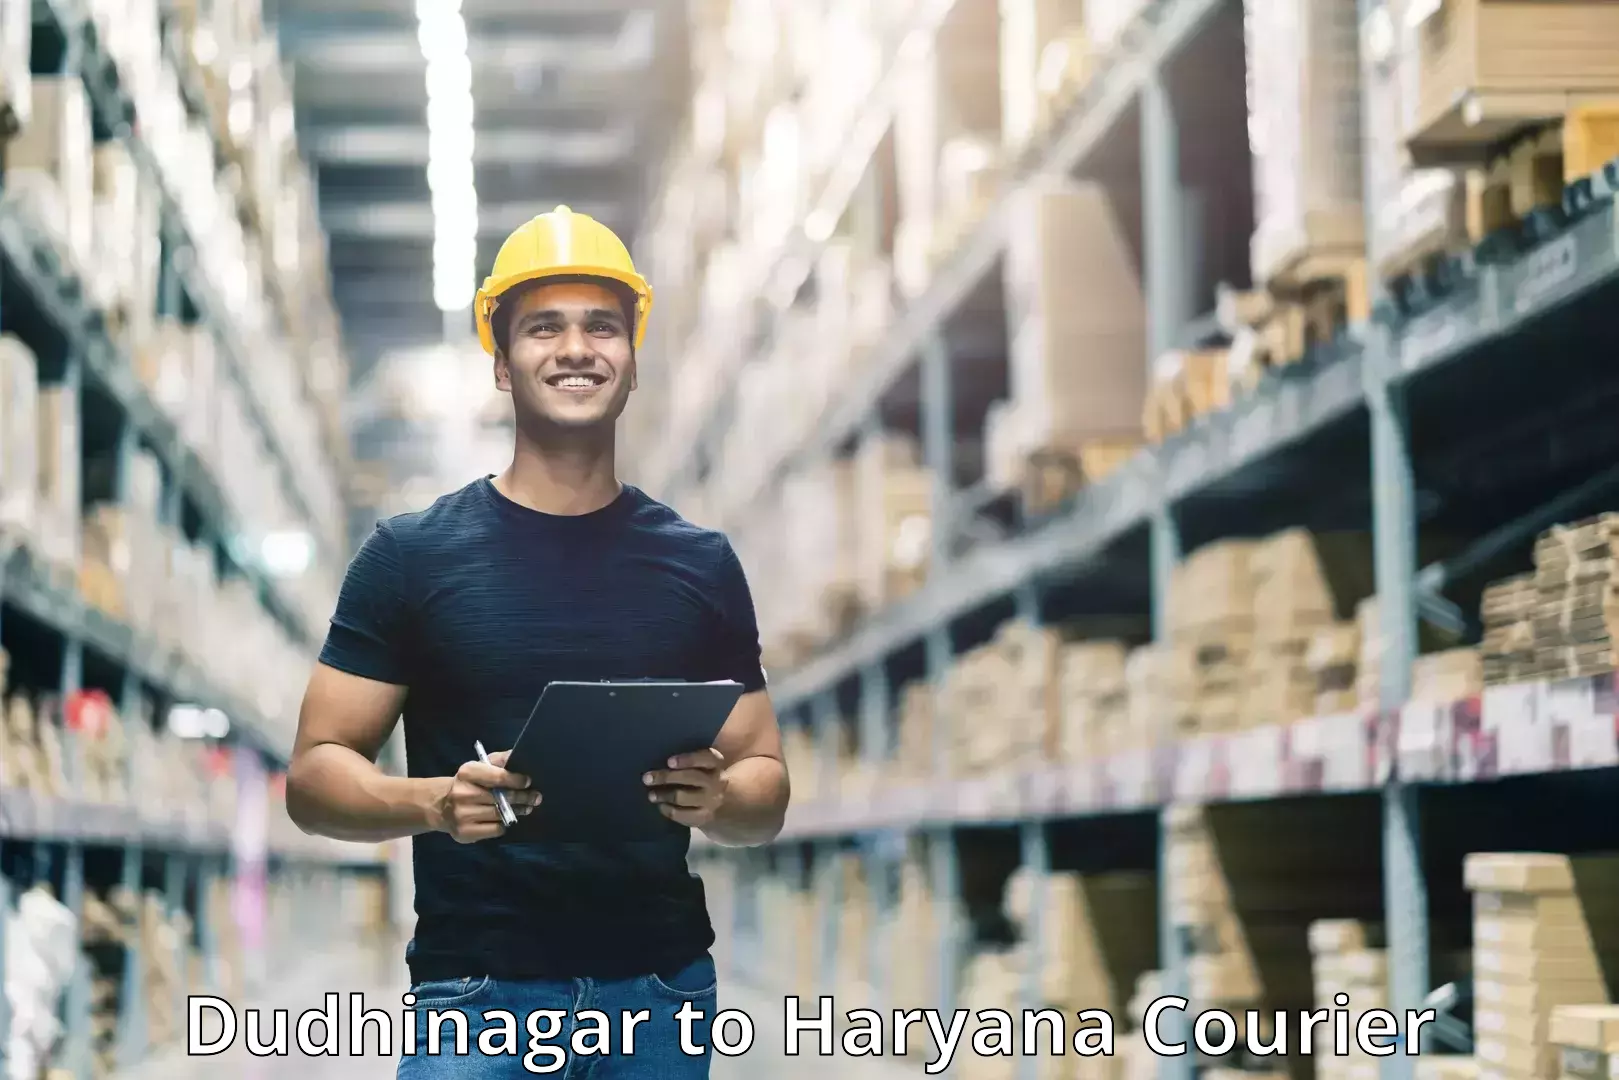 Customer-centric shipping Dudhinagar to Gurugram